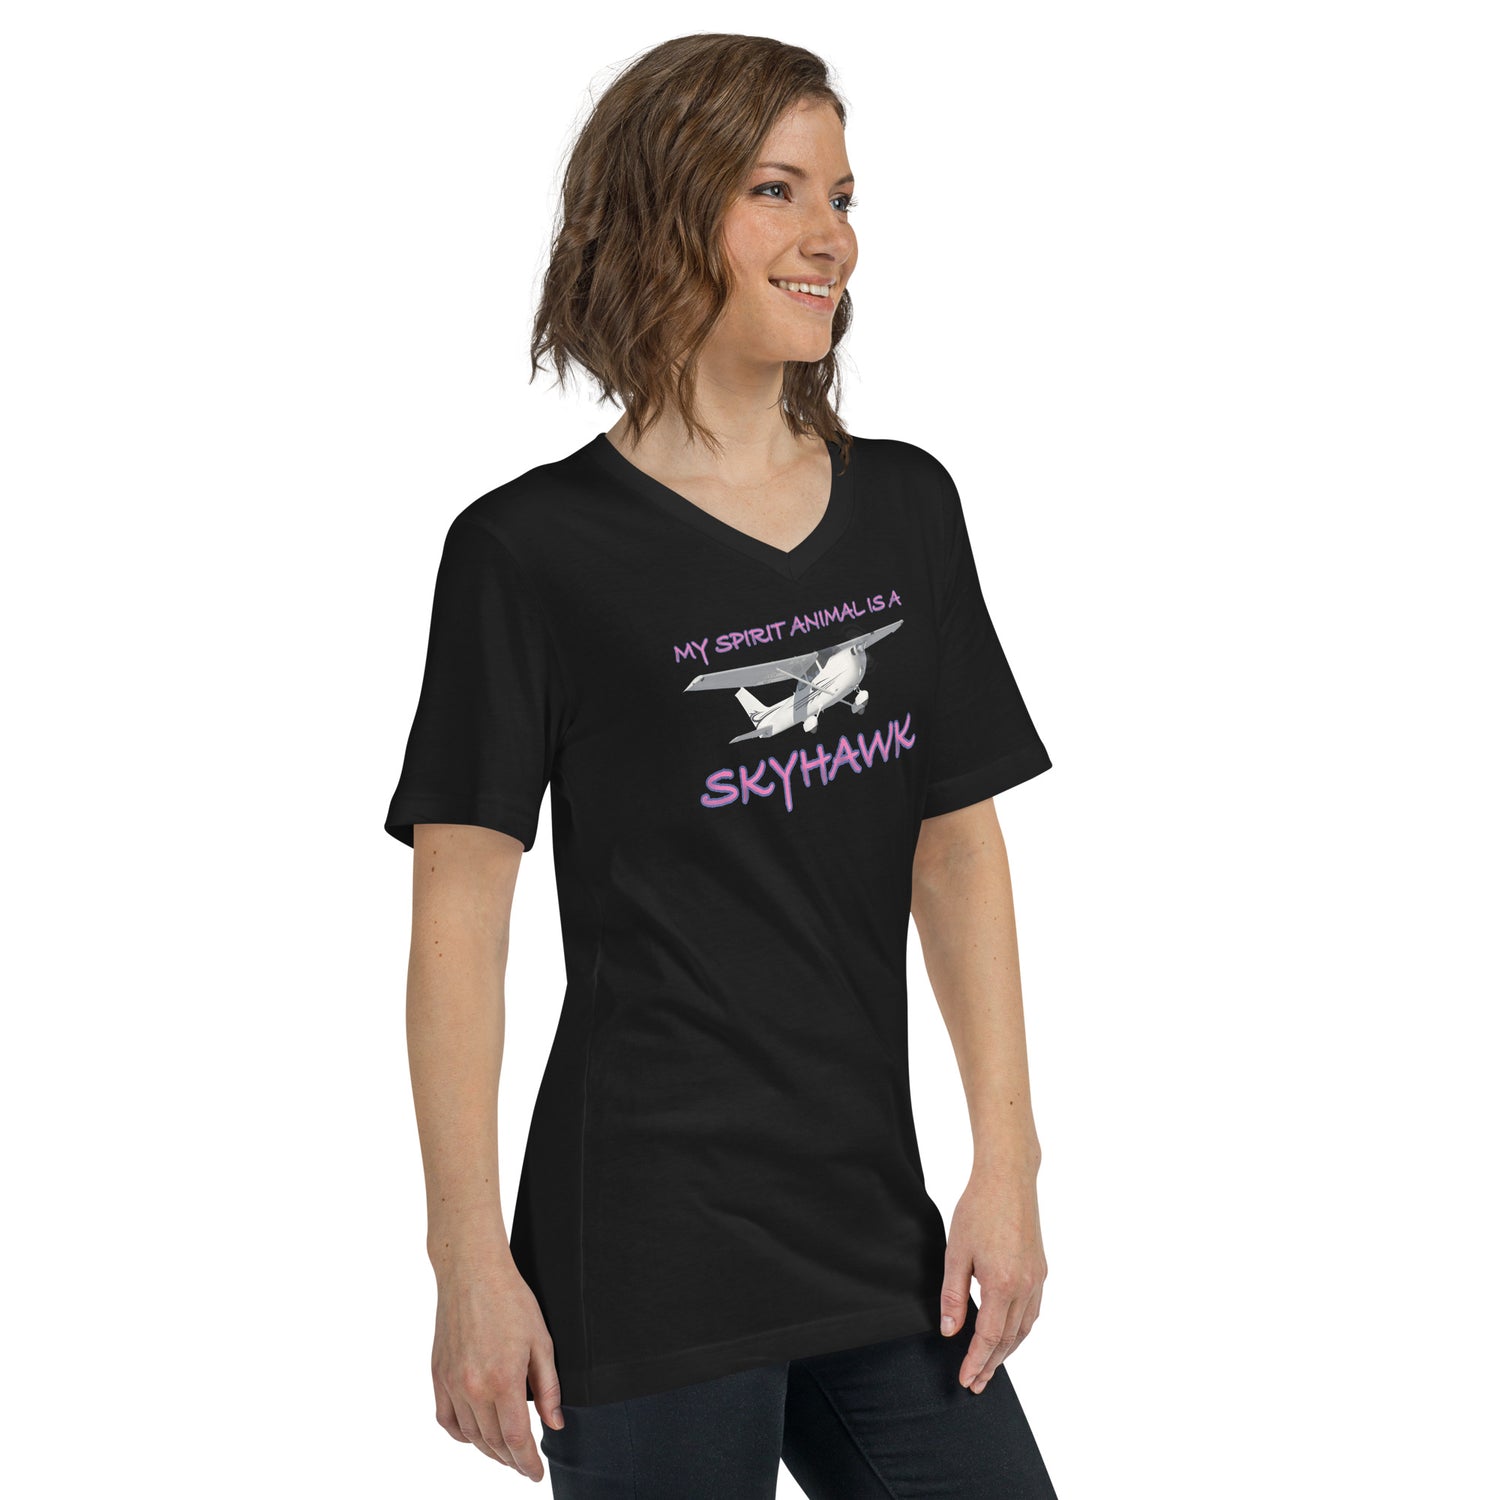 My Spirit Animal is a Skyhawk - Short Sleeve V-Neck T-Shirt